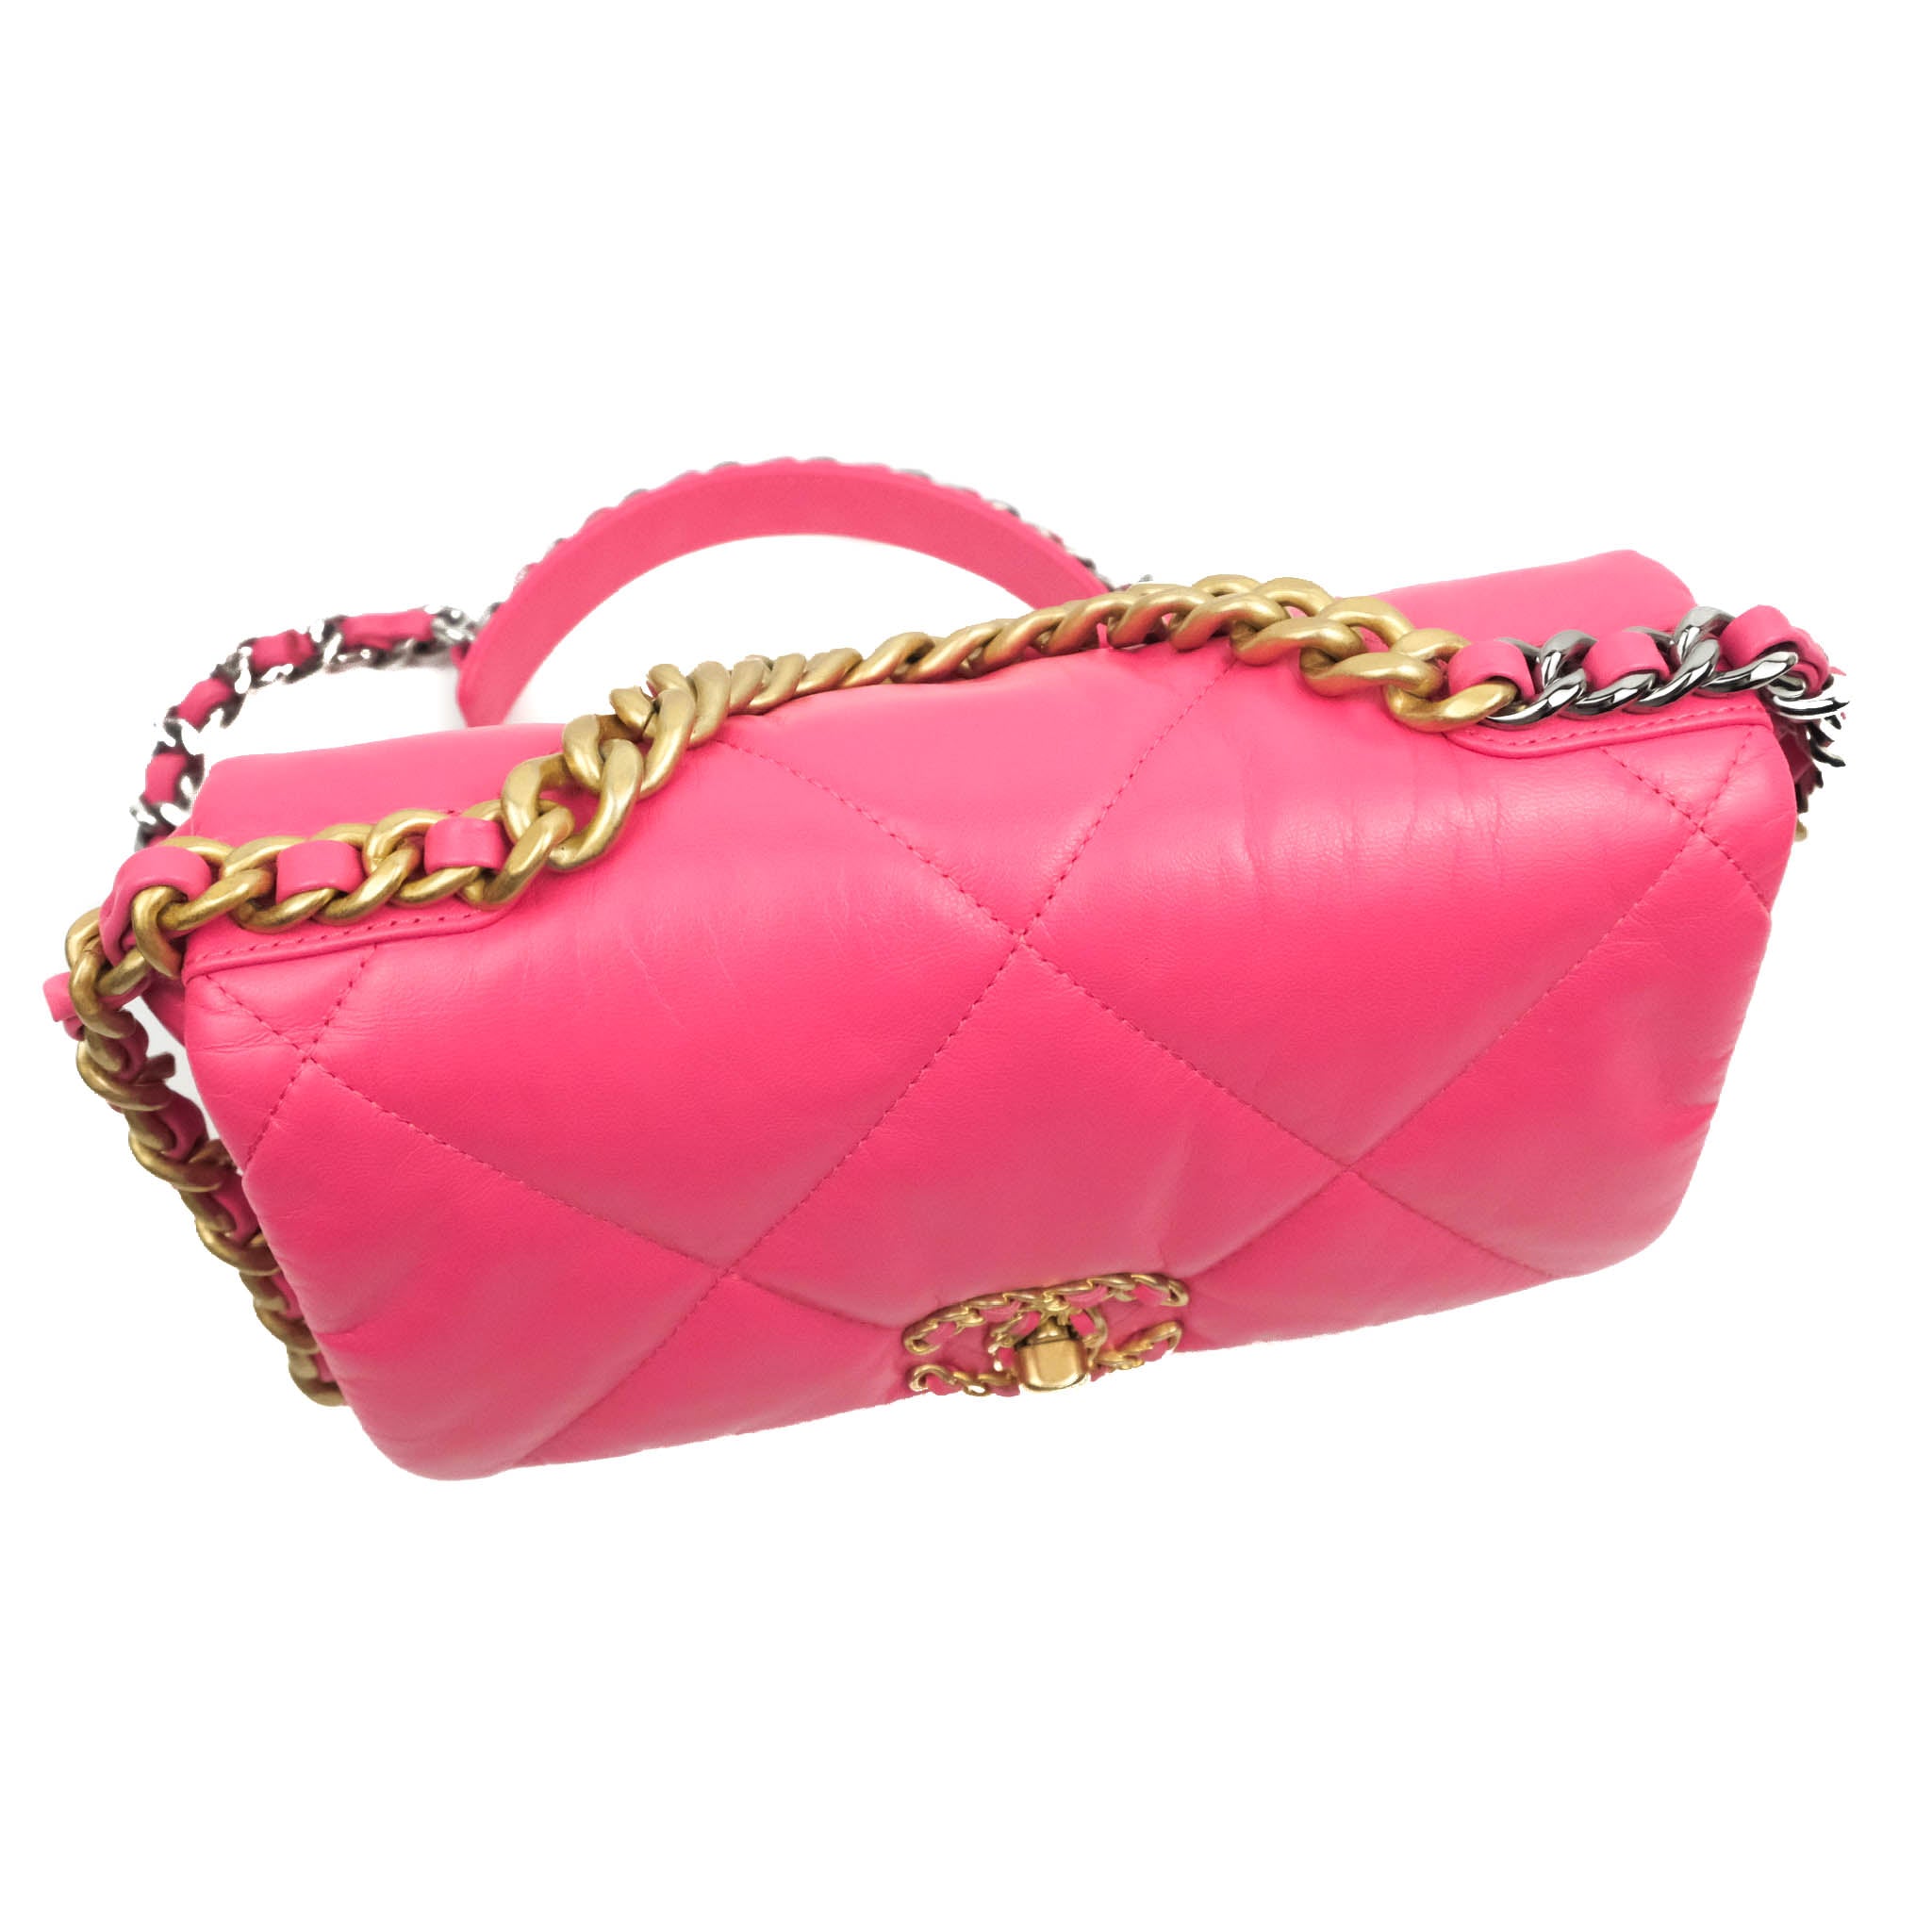 Chanel 19 Neon Pink Handbag